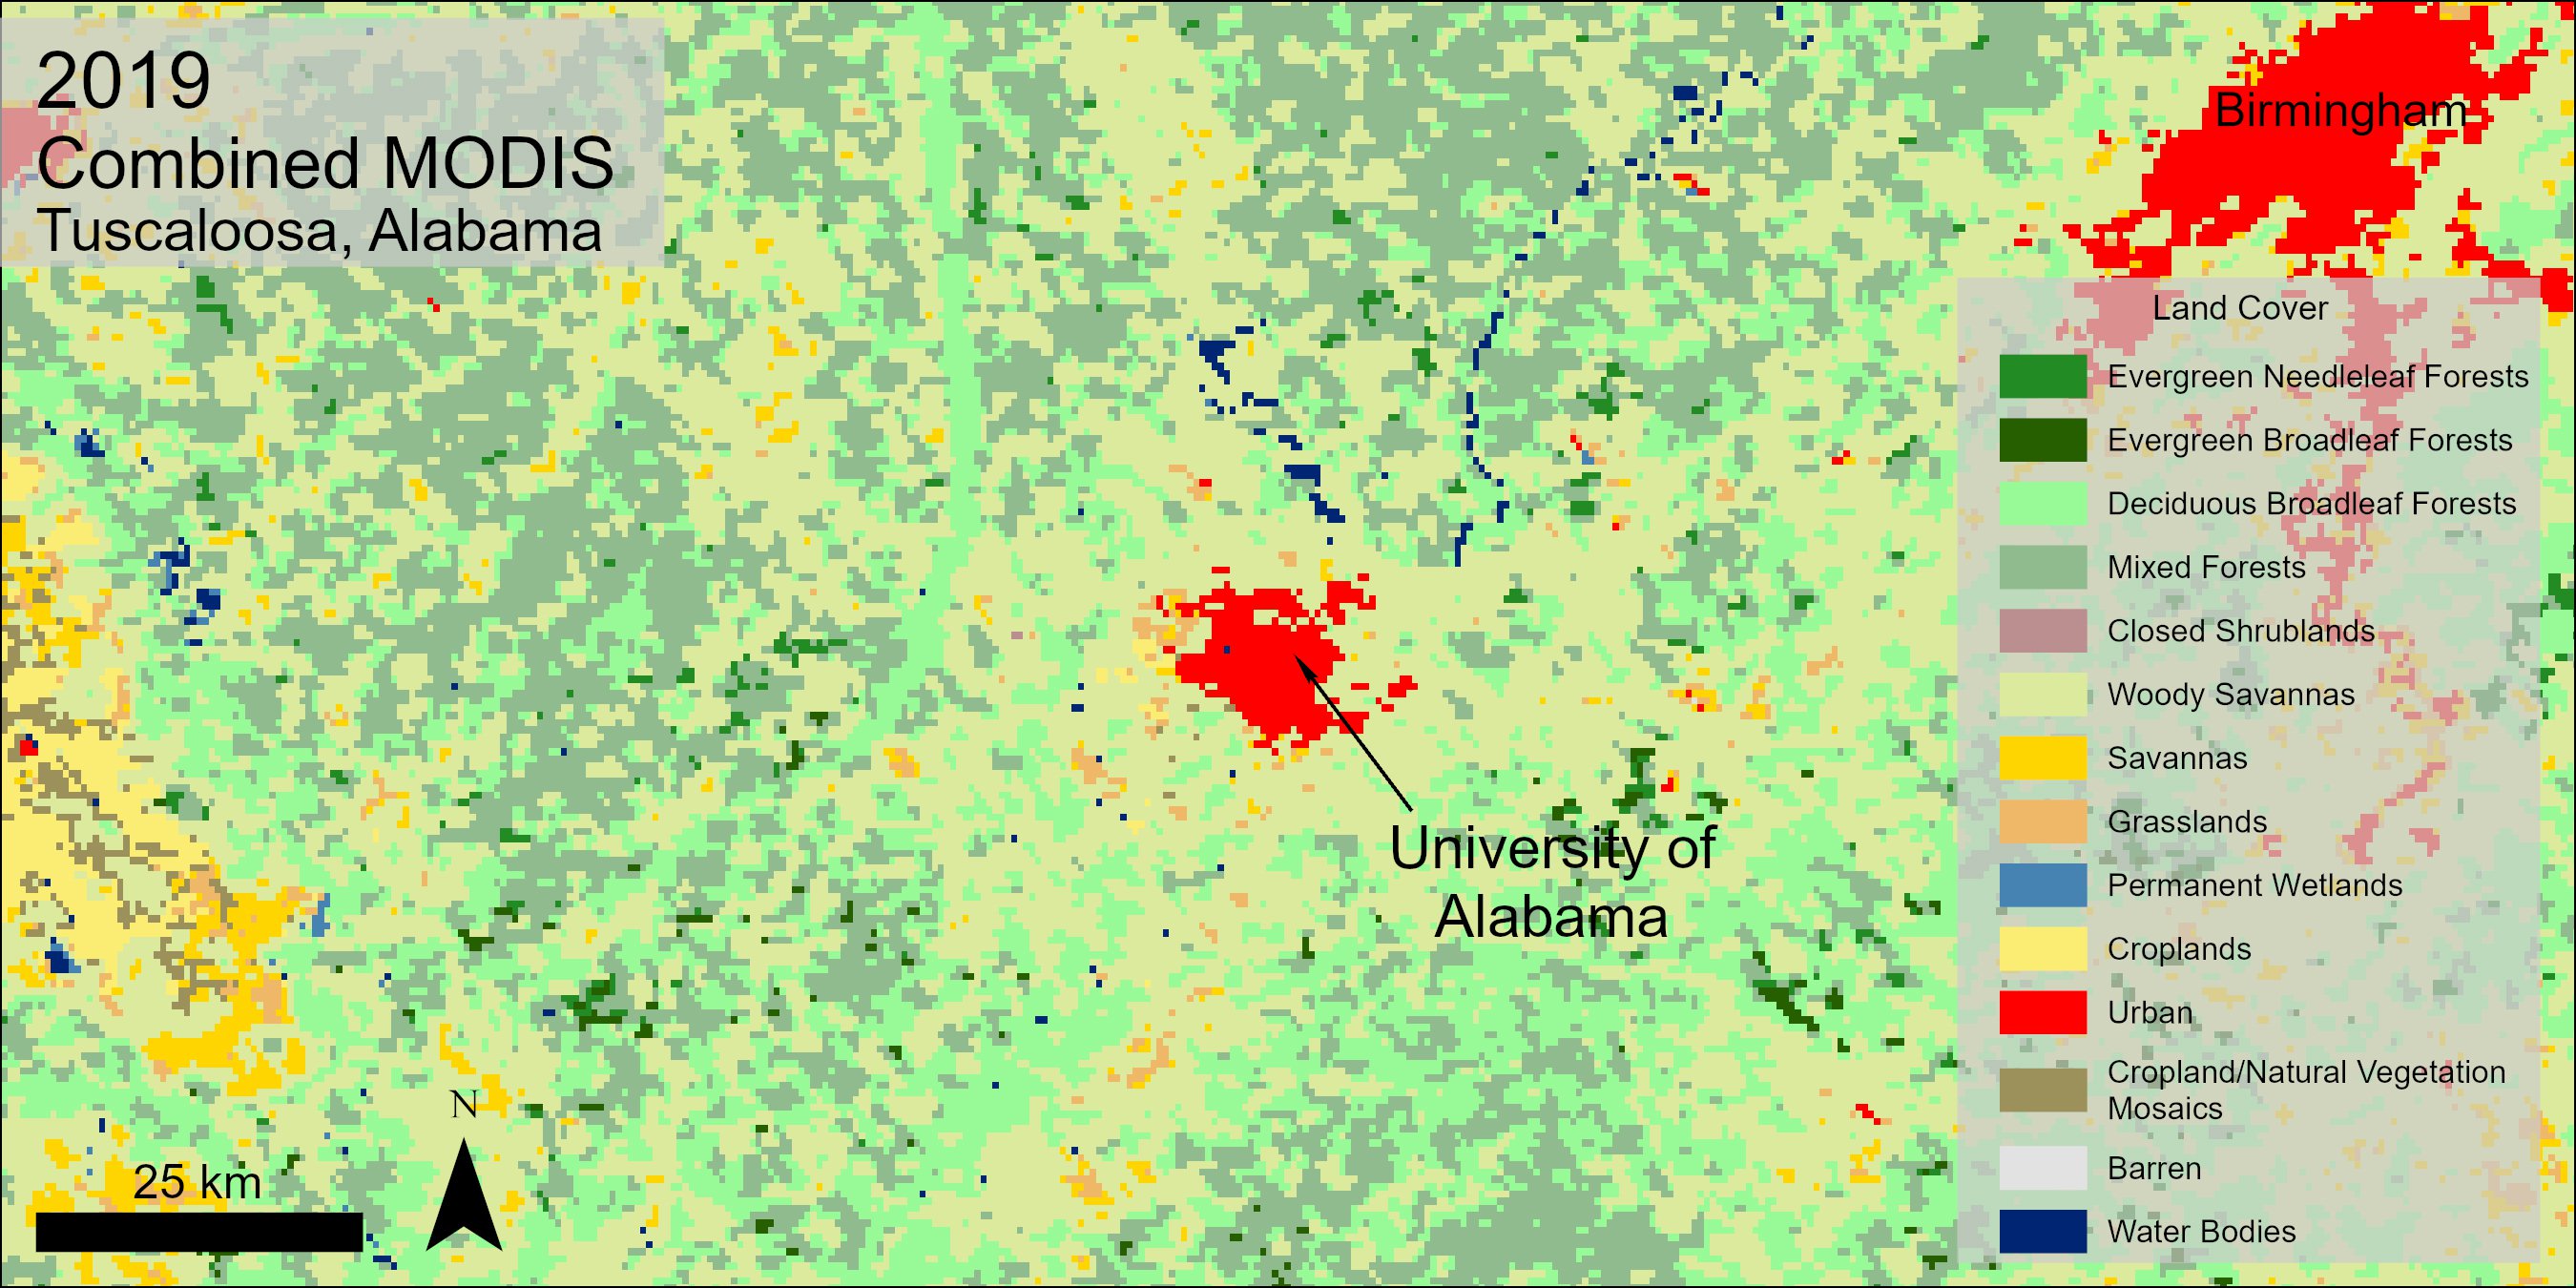 Combined MODIS land cover map over Tuscaloosa, Alabama and the University of Alabama.